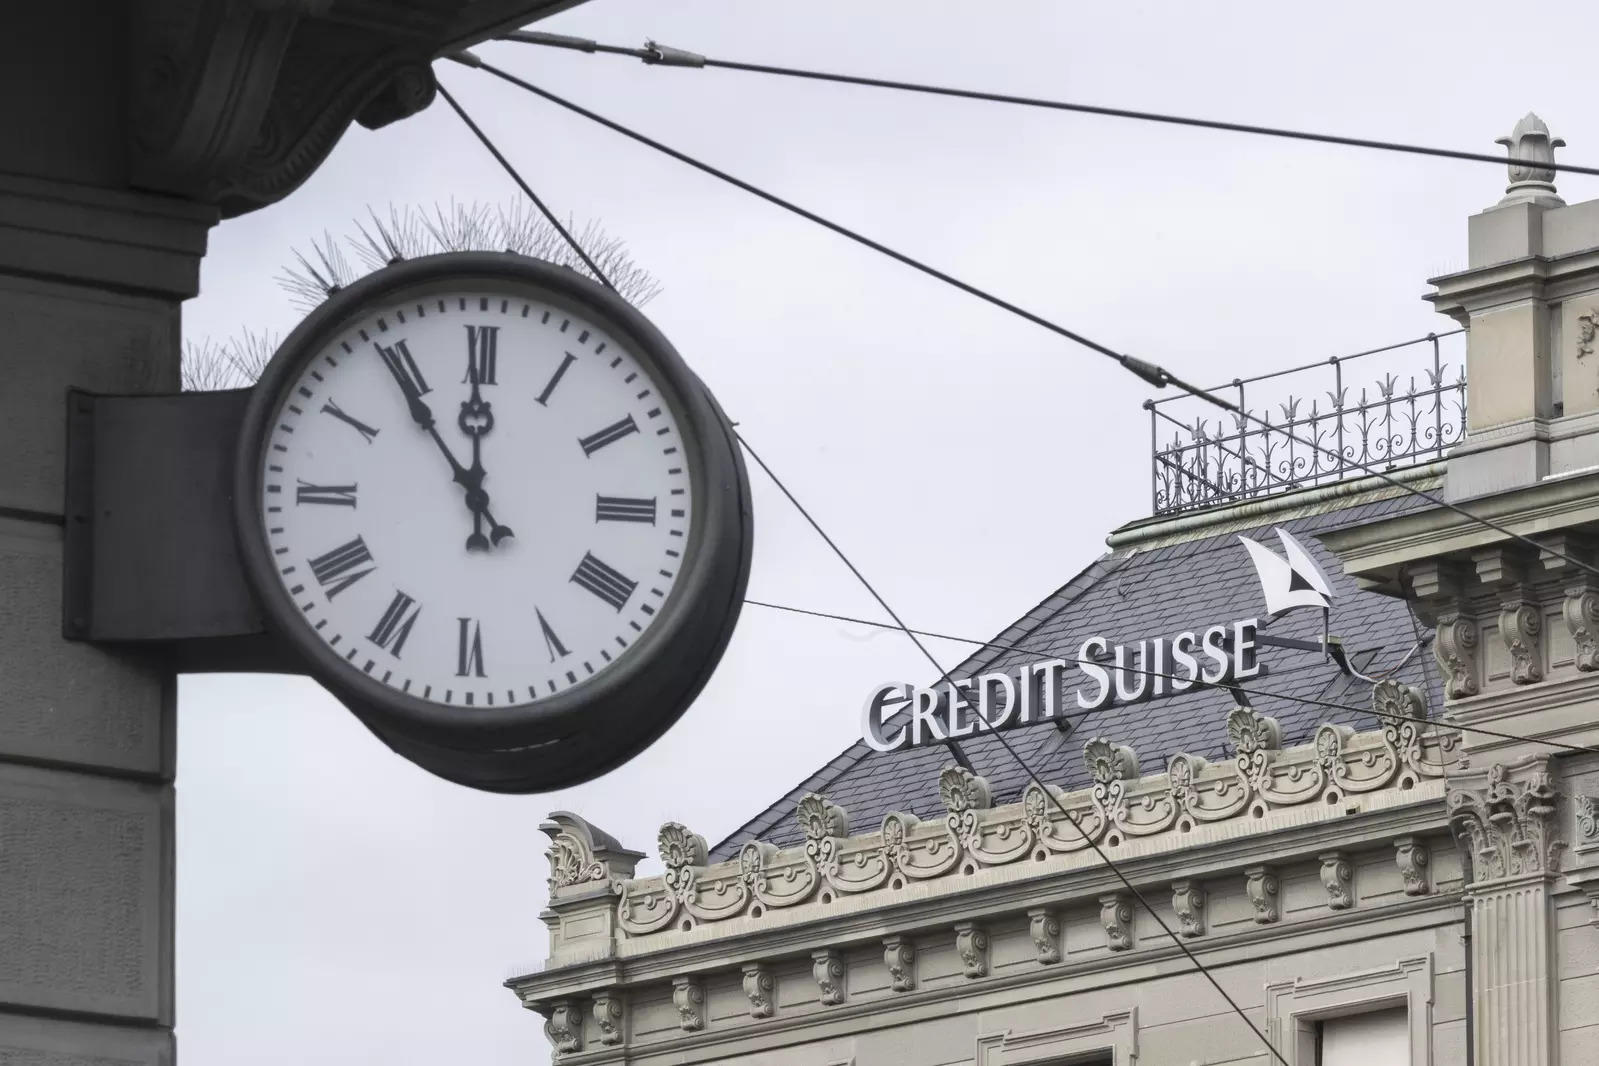 UBS-Credit Suisse merger